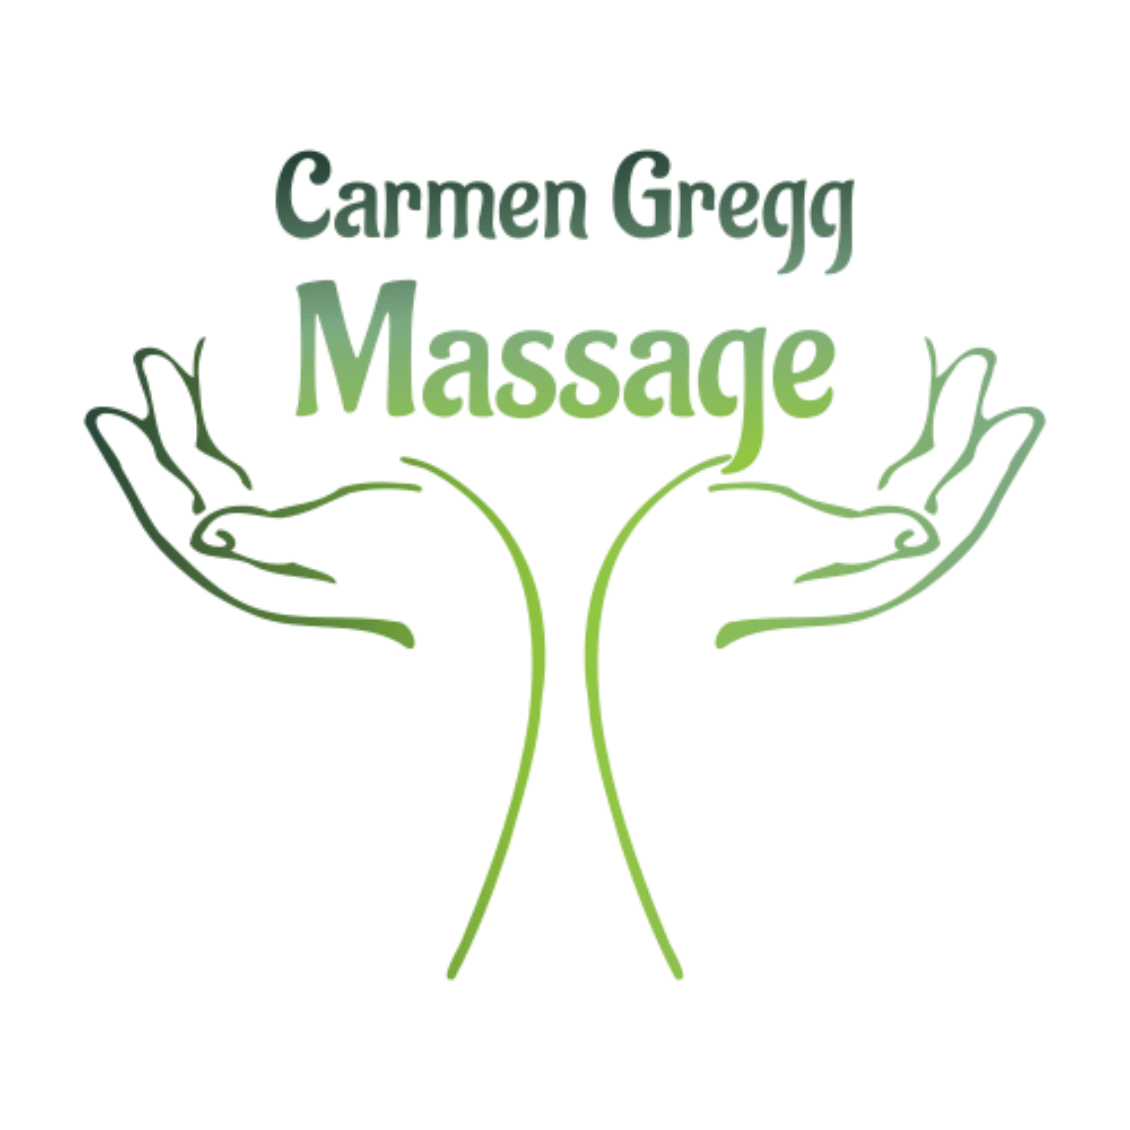 Shop Local carmen gregg massage